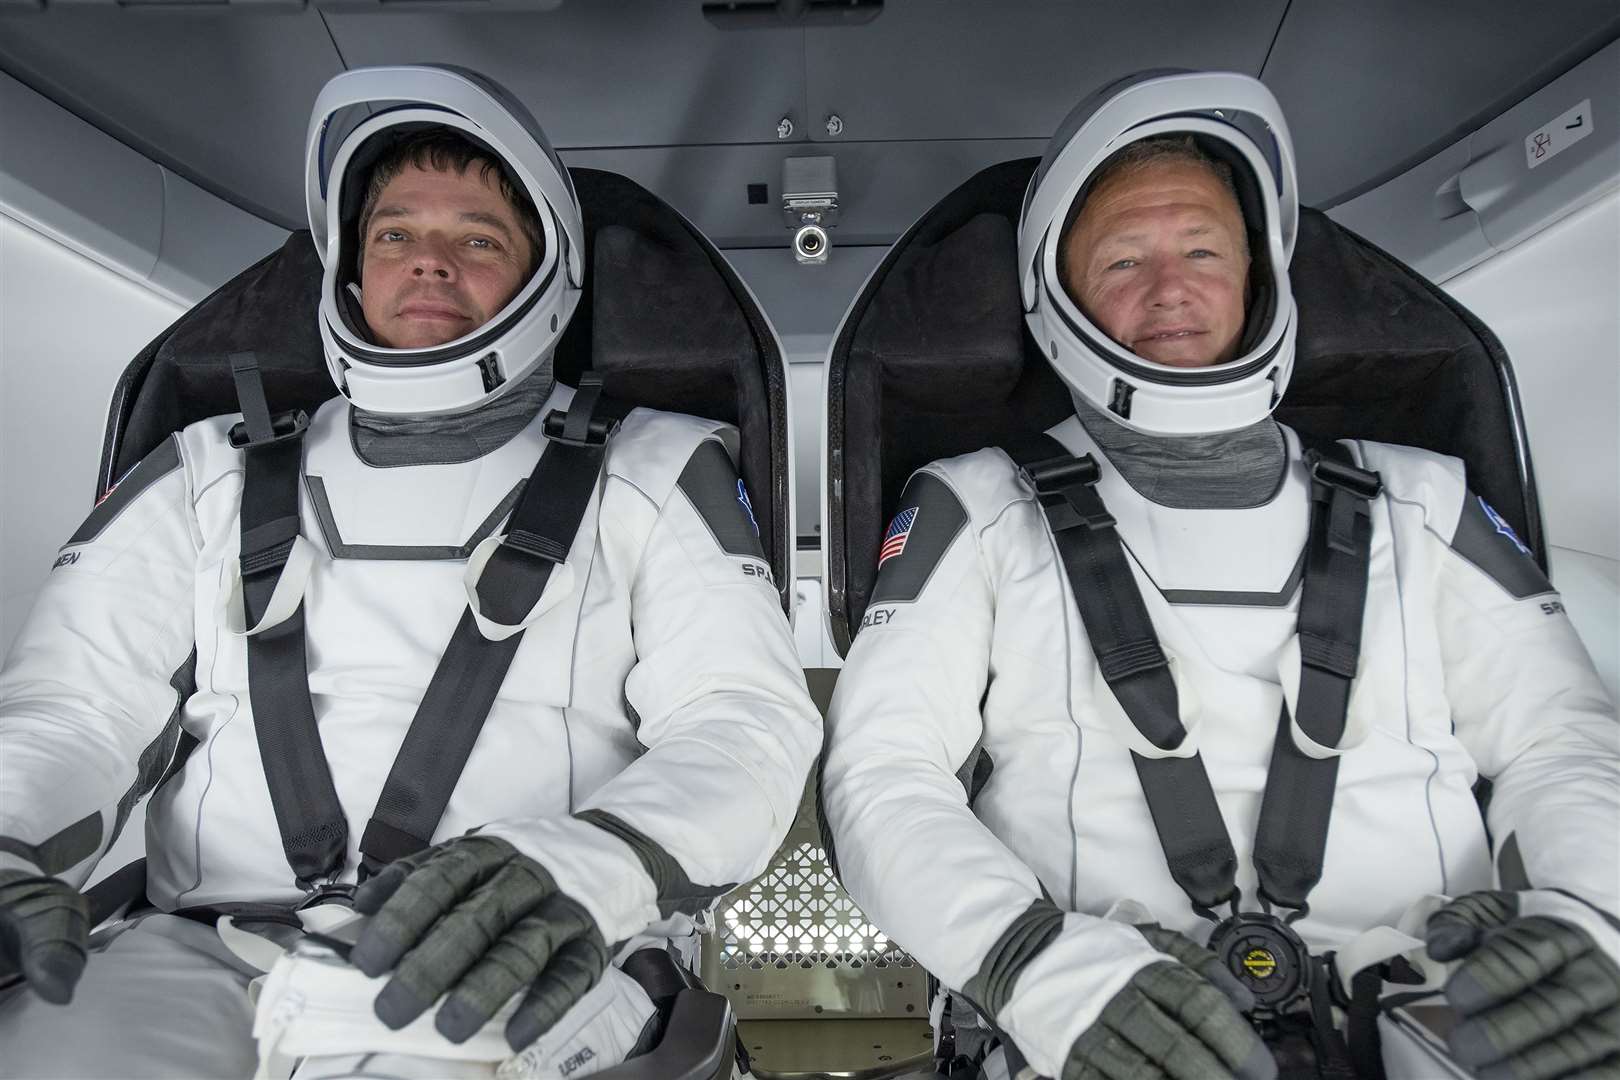 Nasa astronauts Robert Behnken and Douglas Hurley successfully splashed down (Nasa/SpaceX)